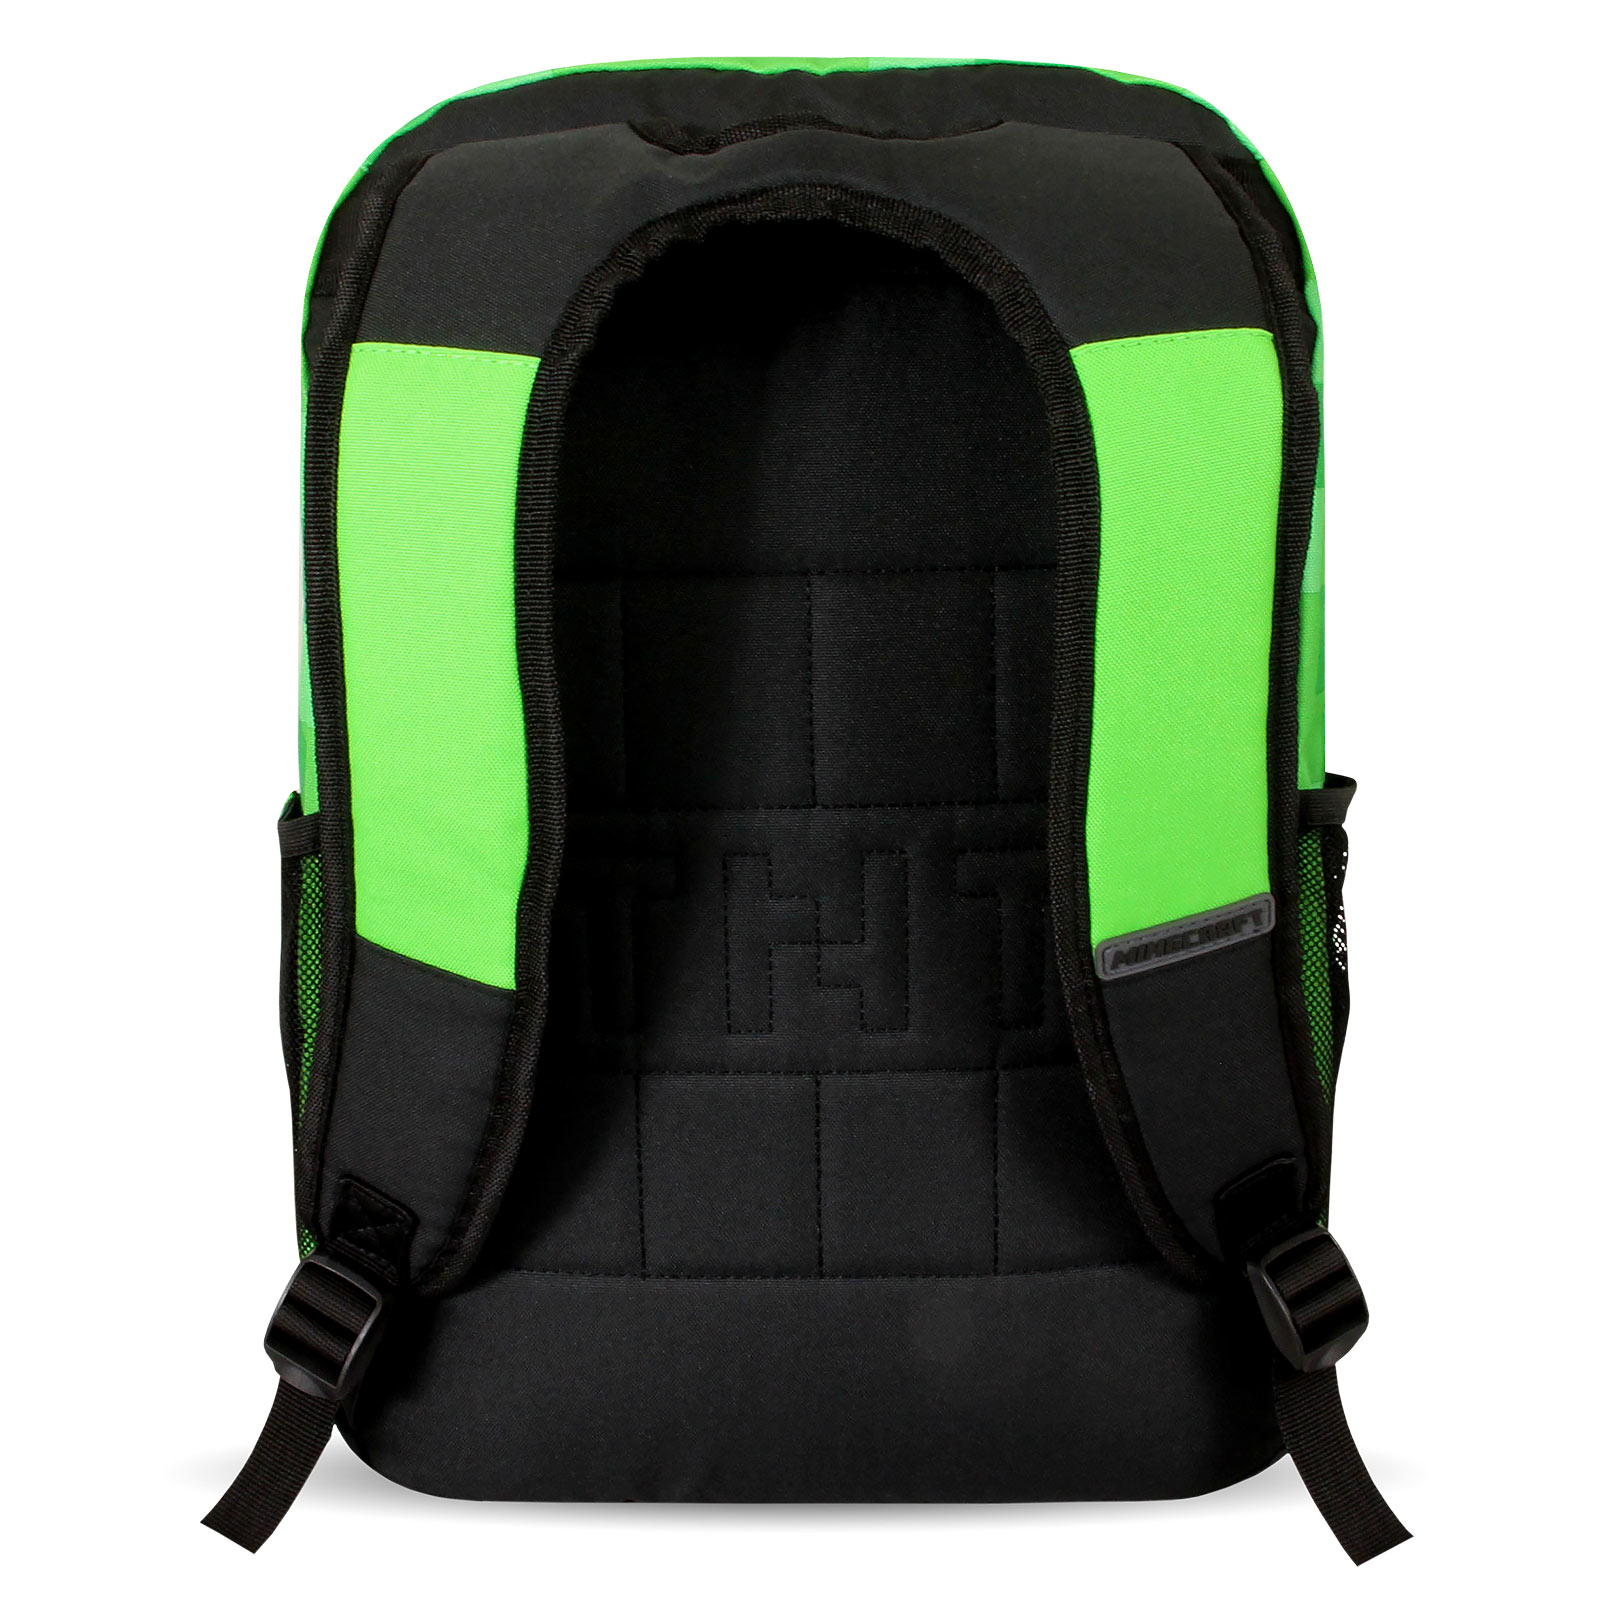 Minecraft - Creeper Inside backpack green